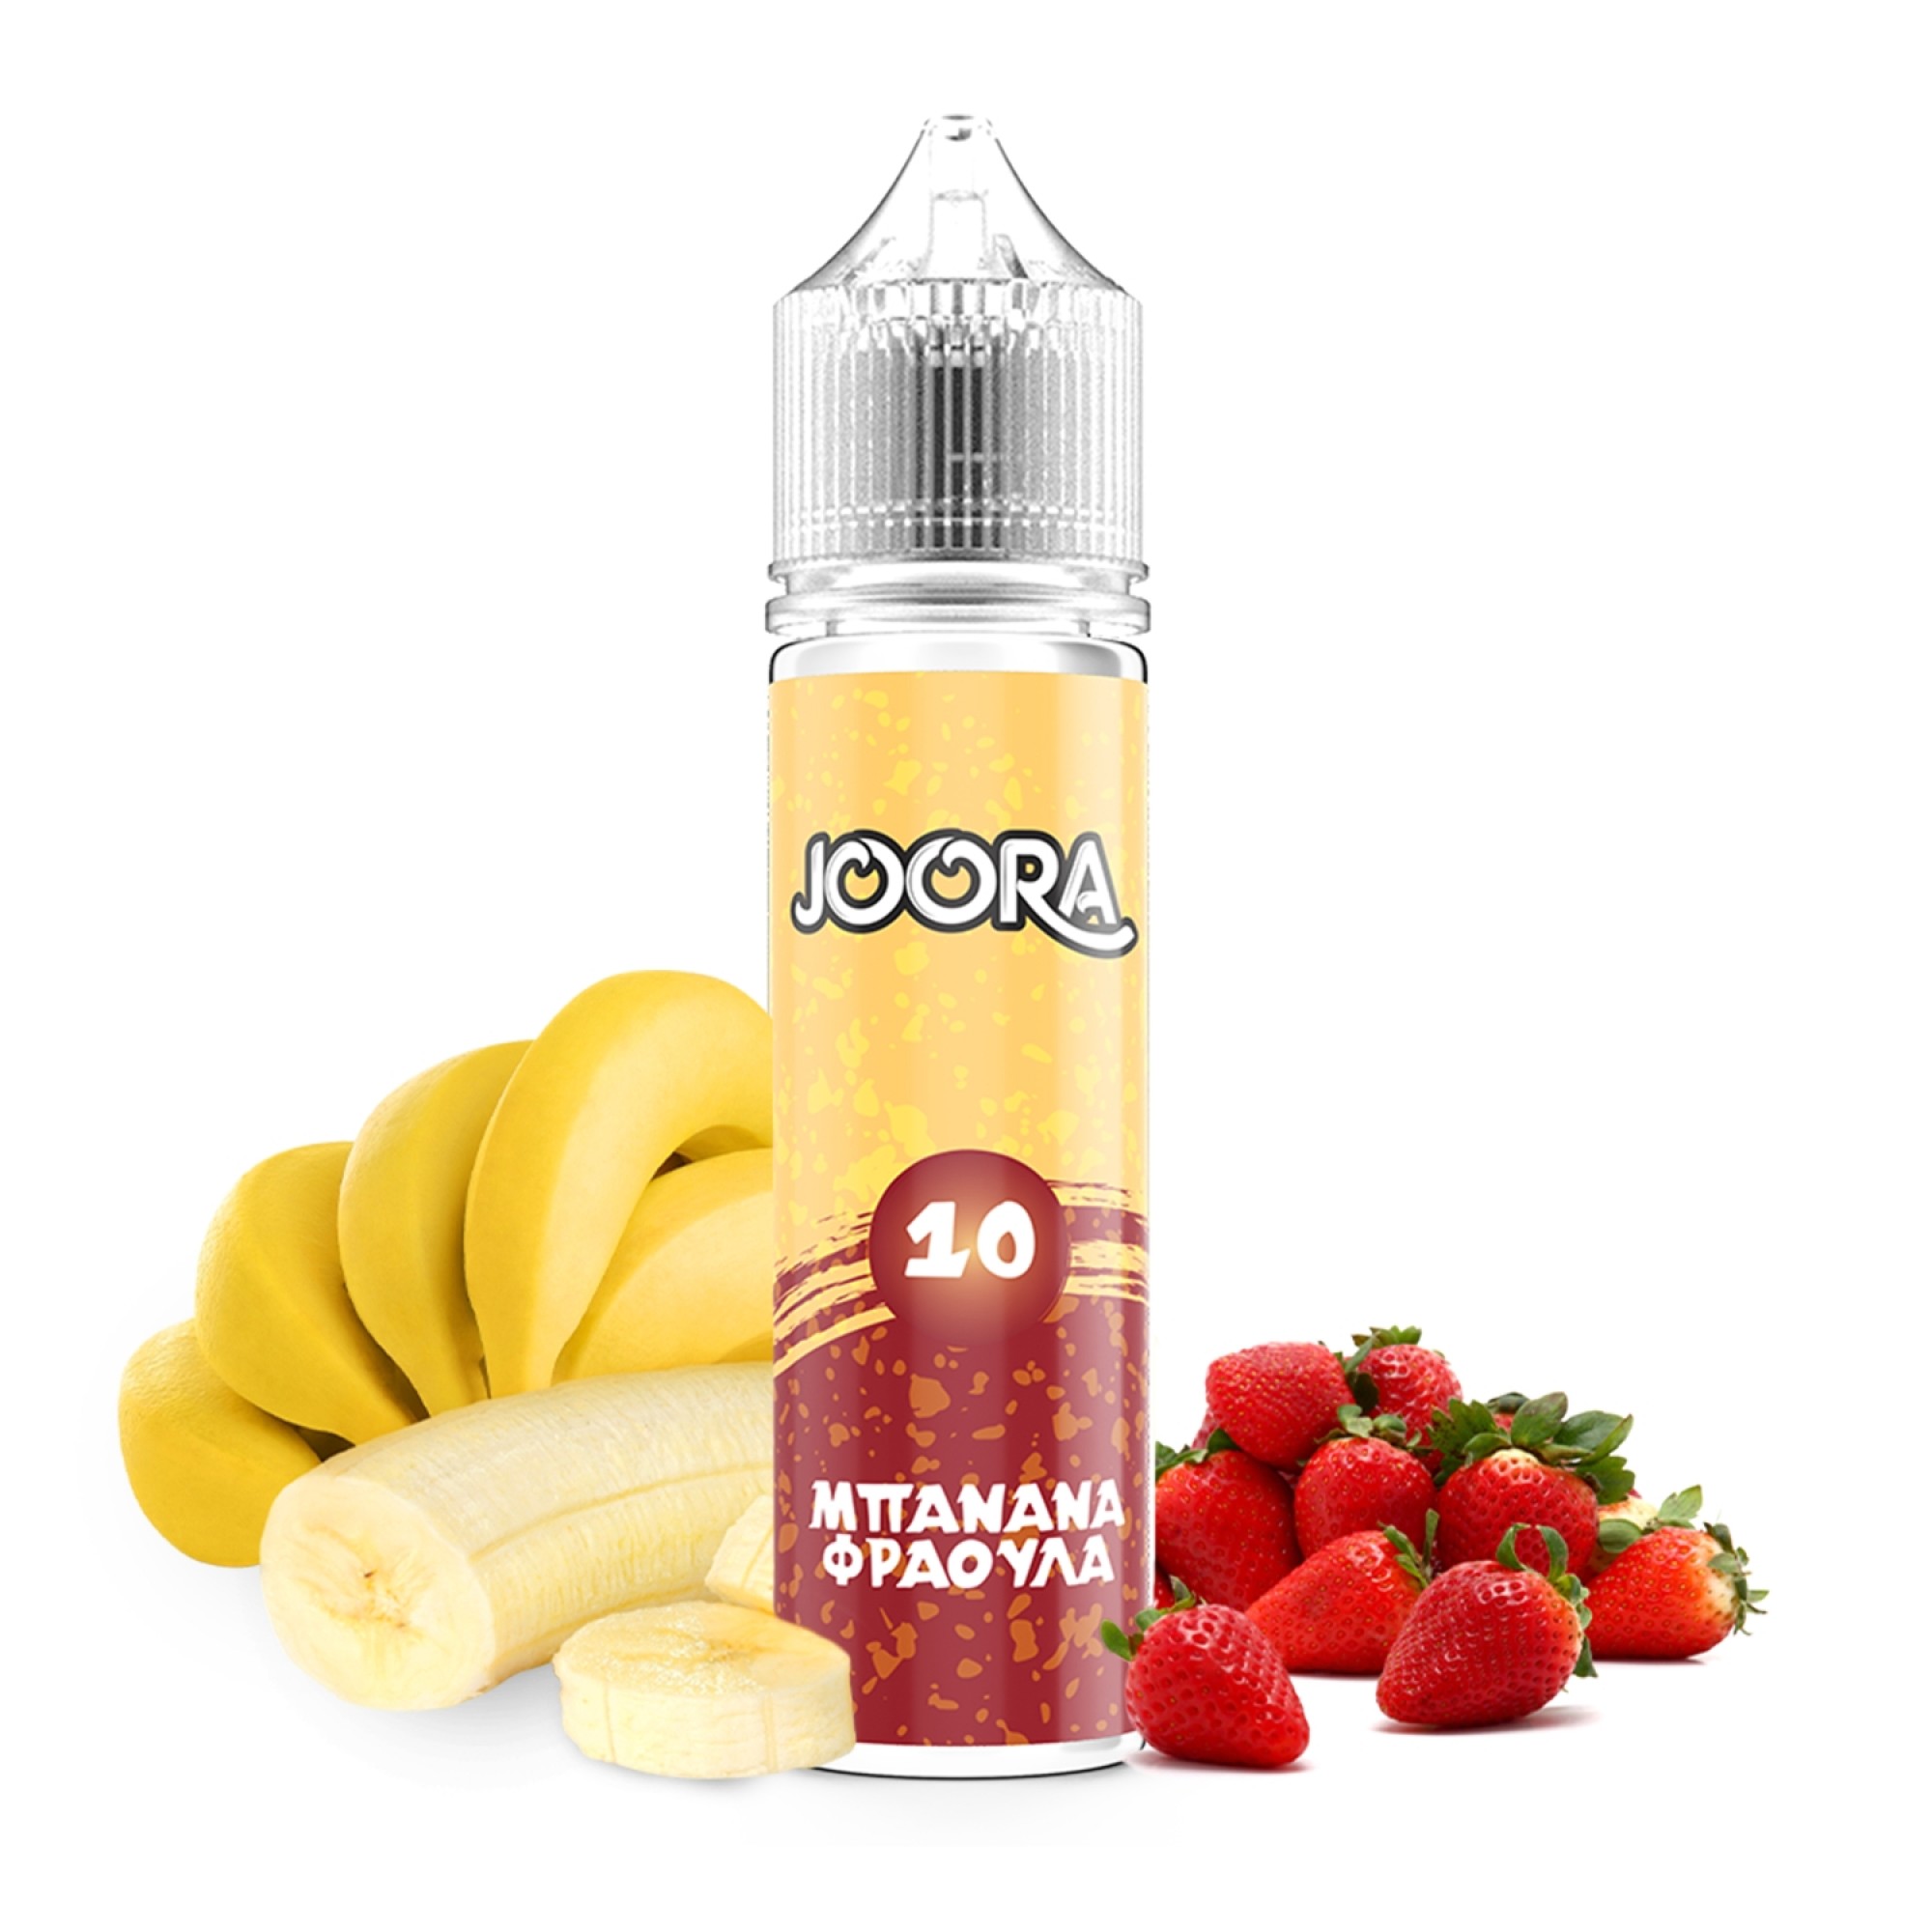 Joora 10 Μπανάνα Φράουλα 60